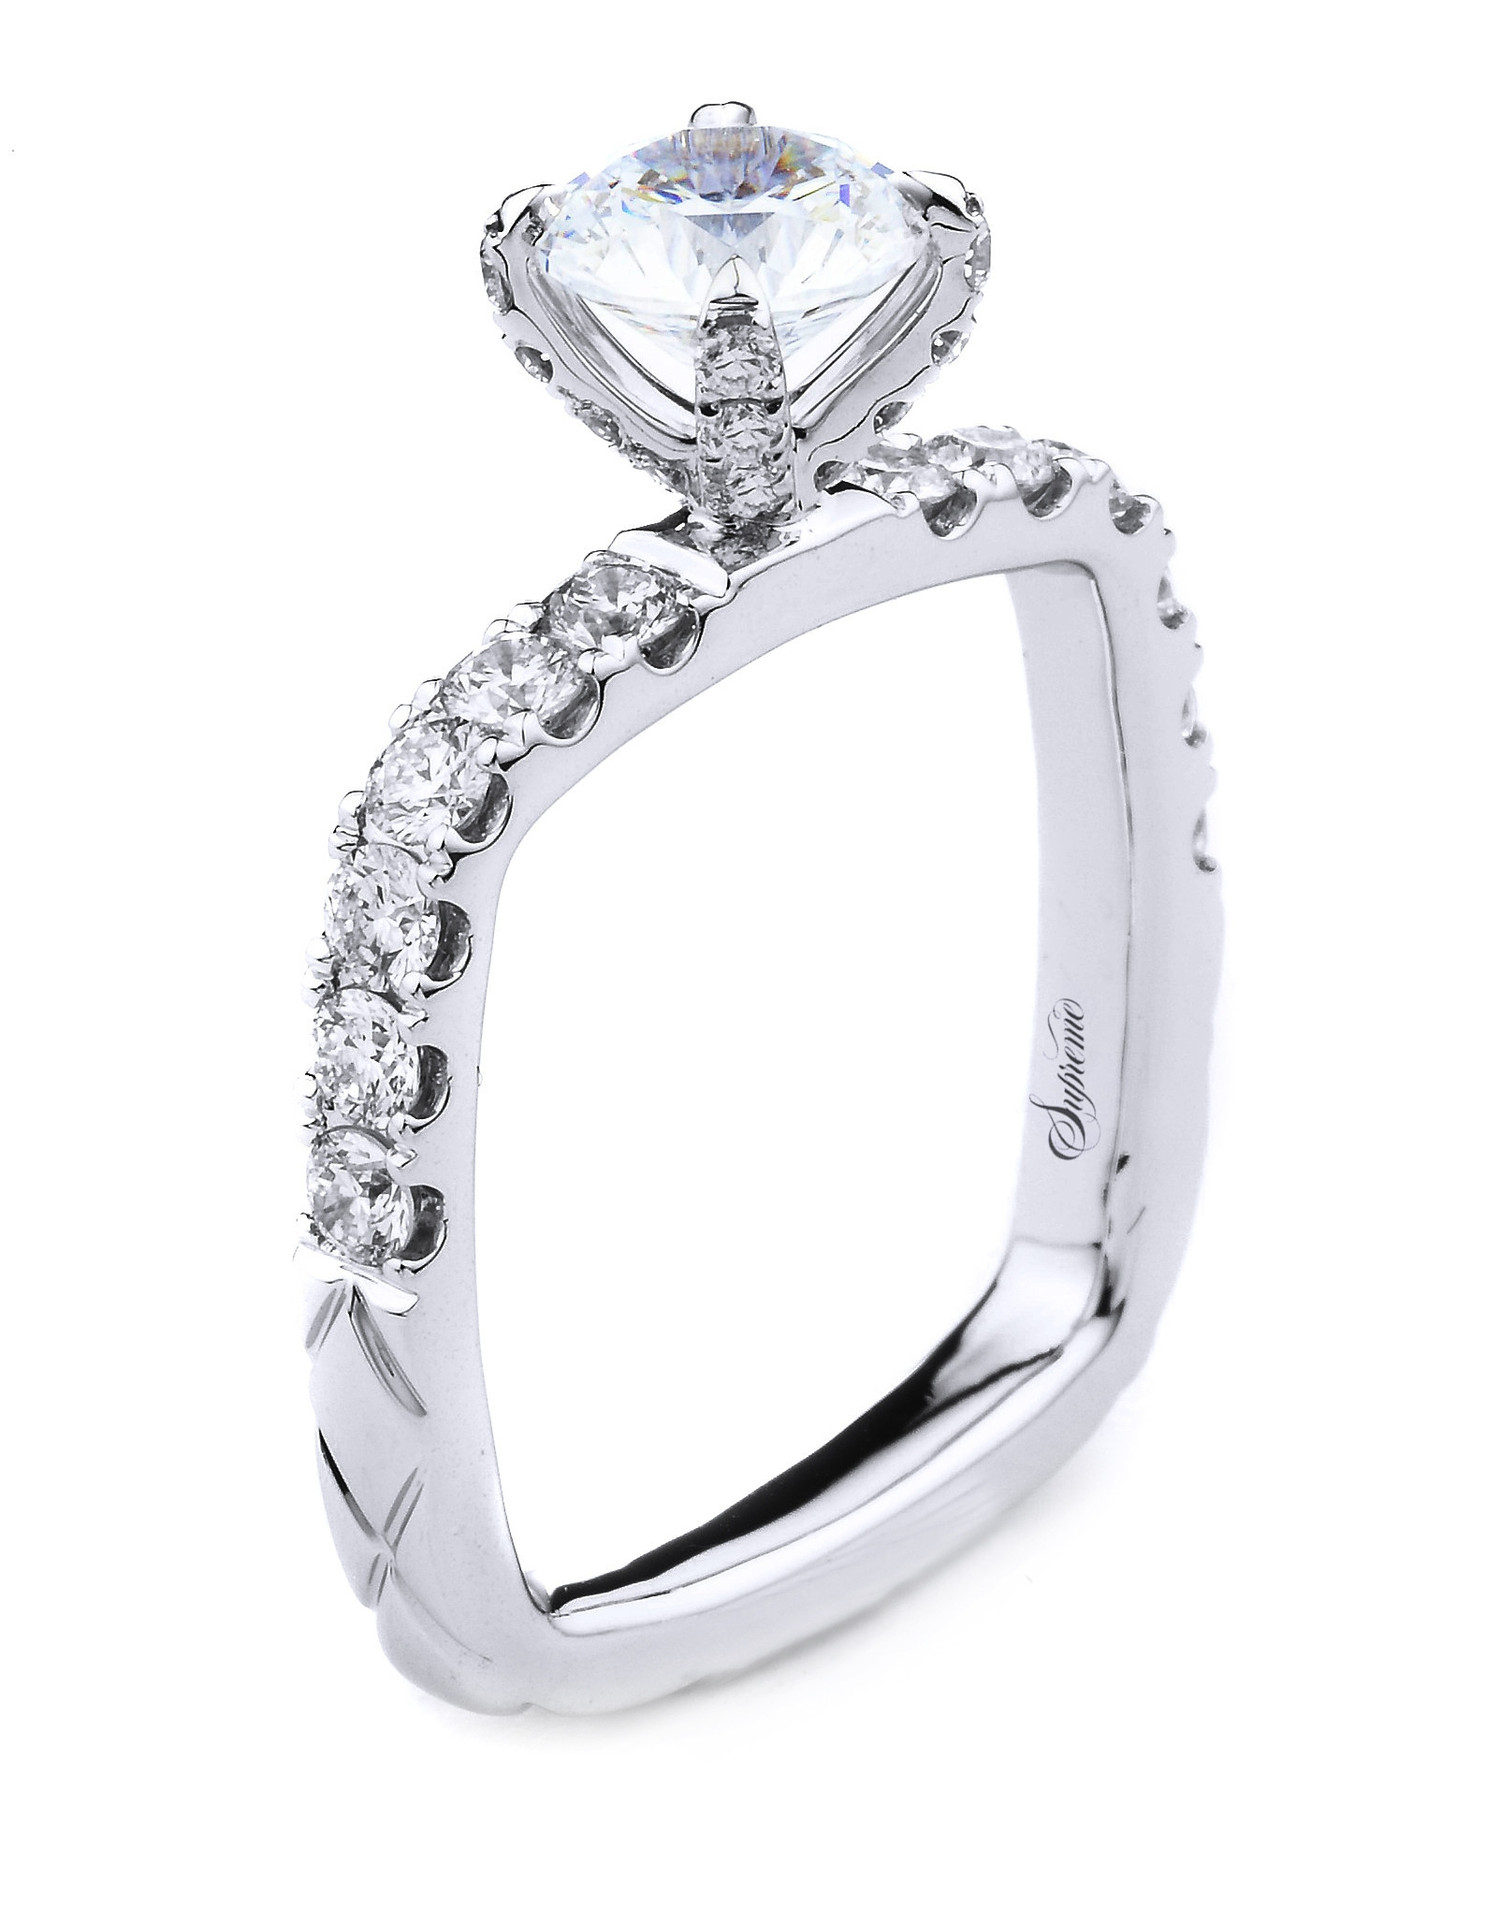 Supreme Jewelry by Supreme Jewelry - WeddingWire.com